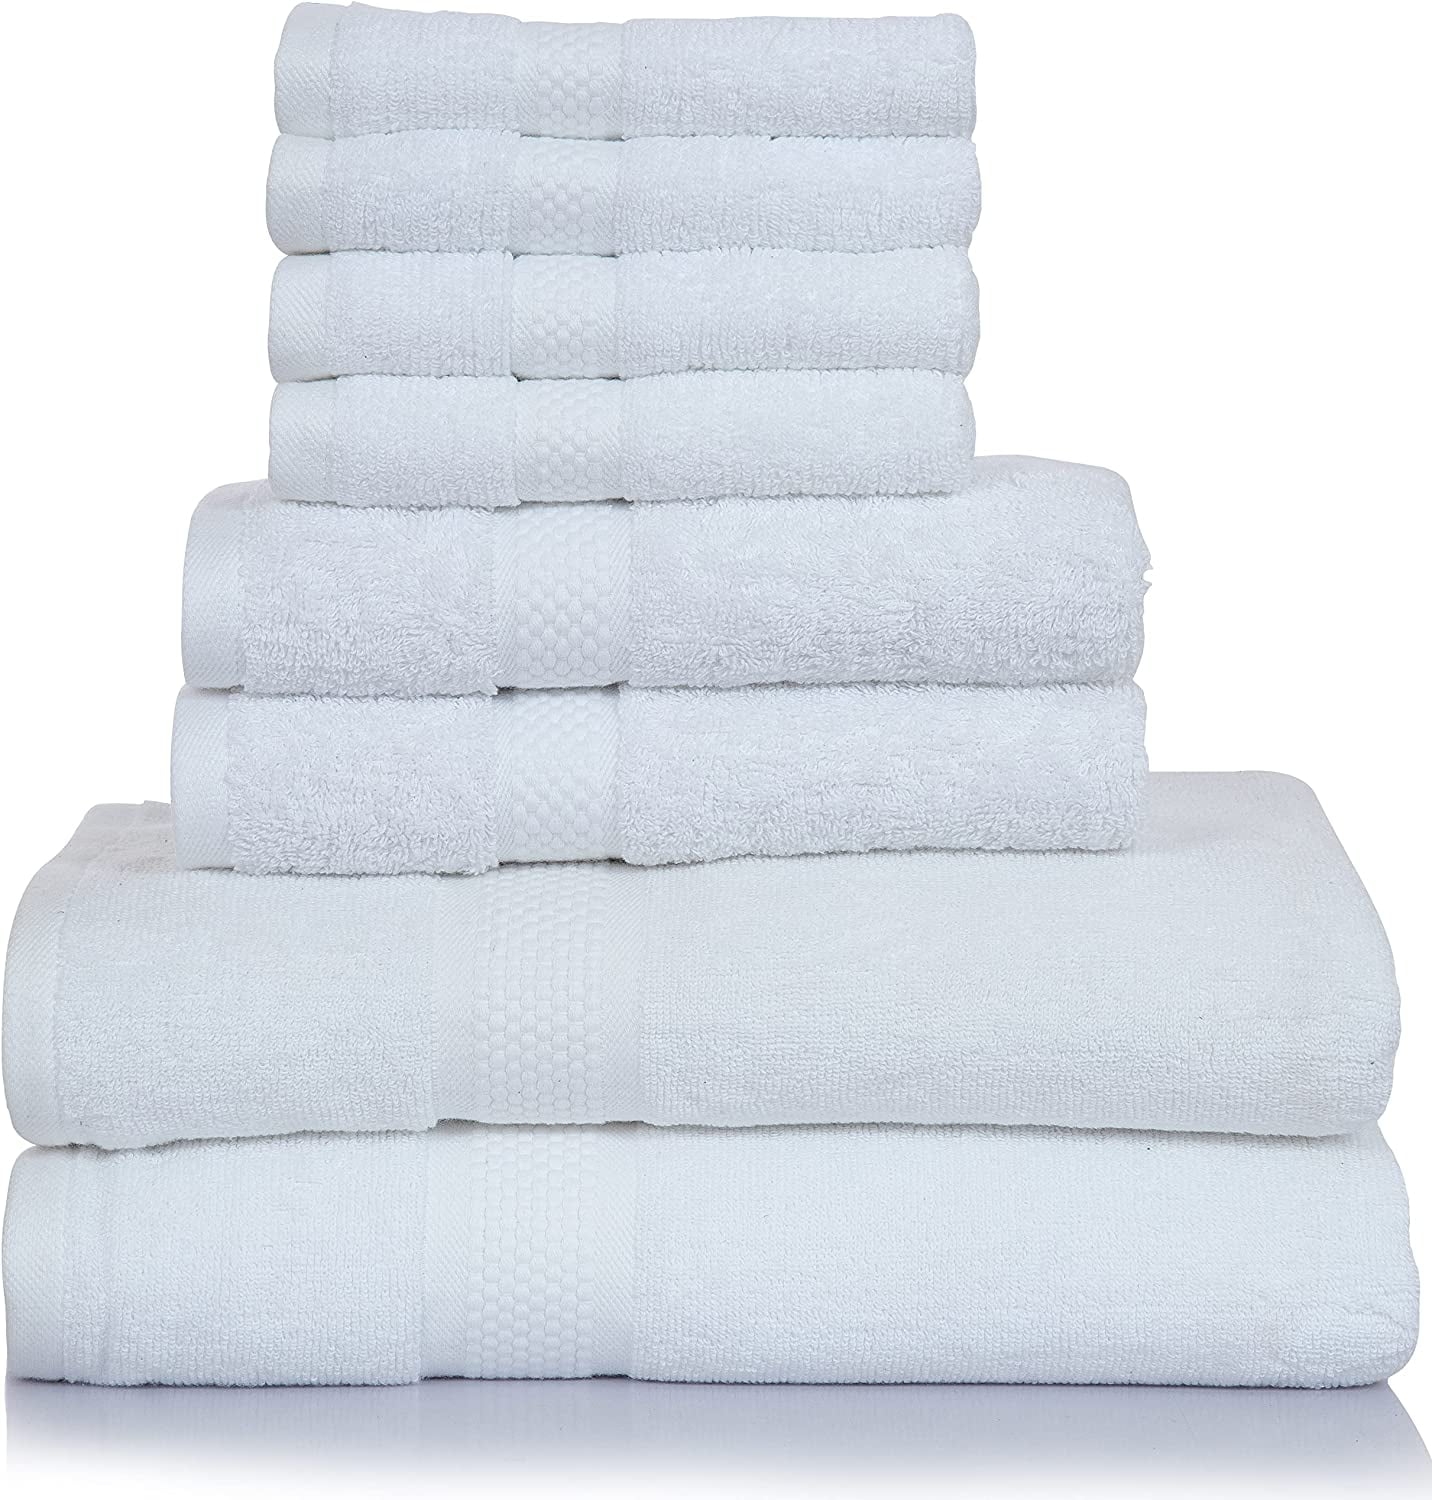  AKTI Premium 8 Piece Bathroom Luxury Towel Set, Hotel & Spa, 2 Bath  Towel 2 Hand Towel 4 Wash Cloth Bathroom Set, 100% Cotton Bathroom Towels,  Extra, Soft Absorbent & Quick